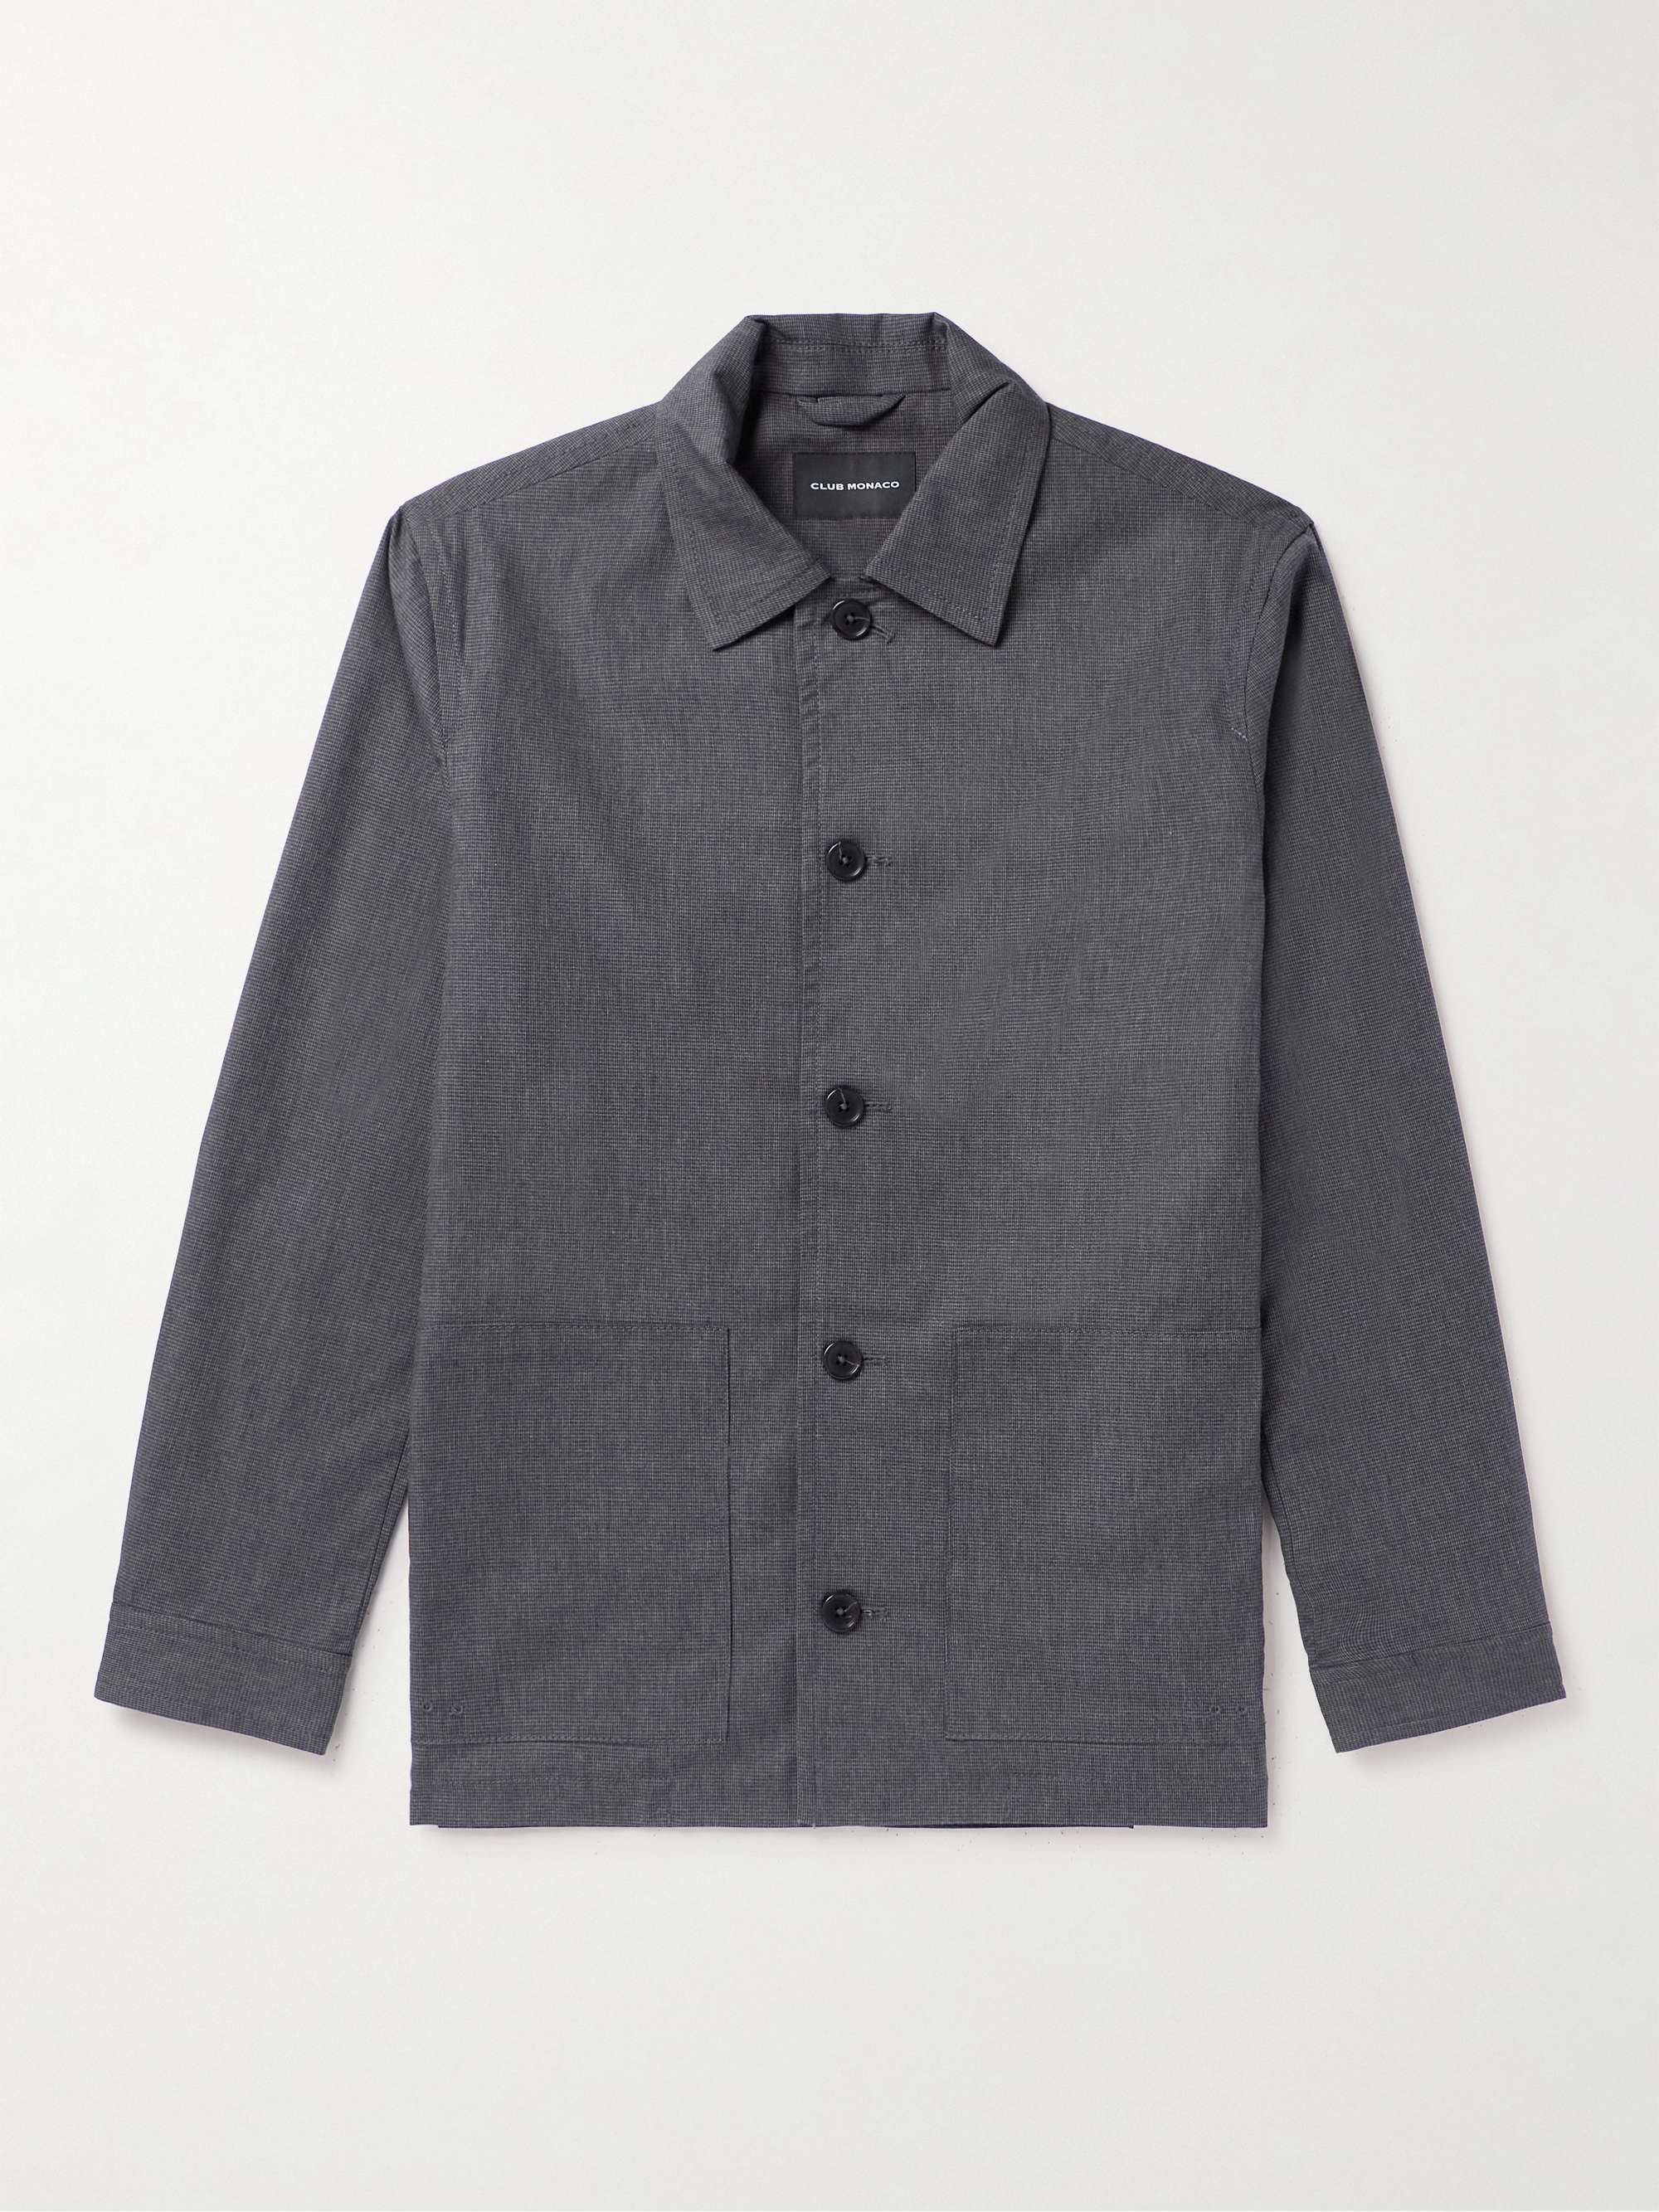 CLUB MONACO Houndstooth Stretch-Cotton Twill Chore Jacket for Men | MR ...